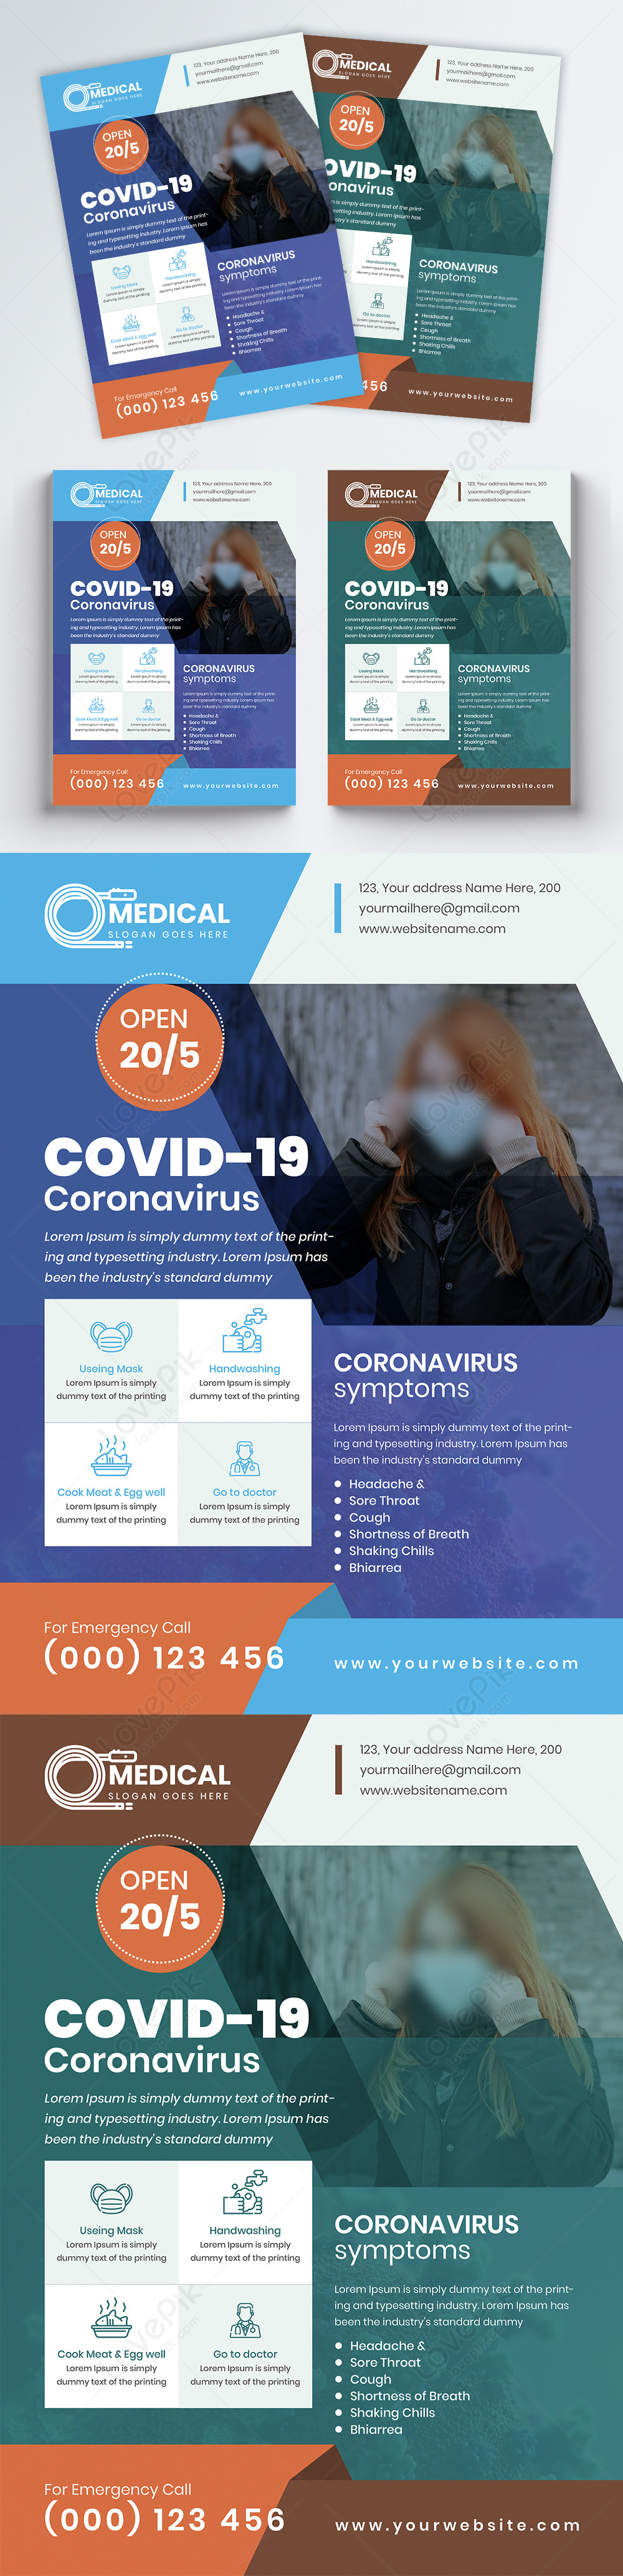 Covid 19 Coronavirus Flyer Template Image Picture Free Download Lovepik Com